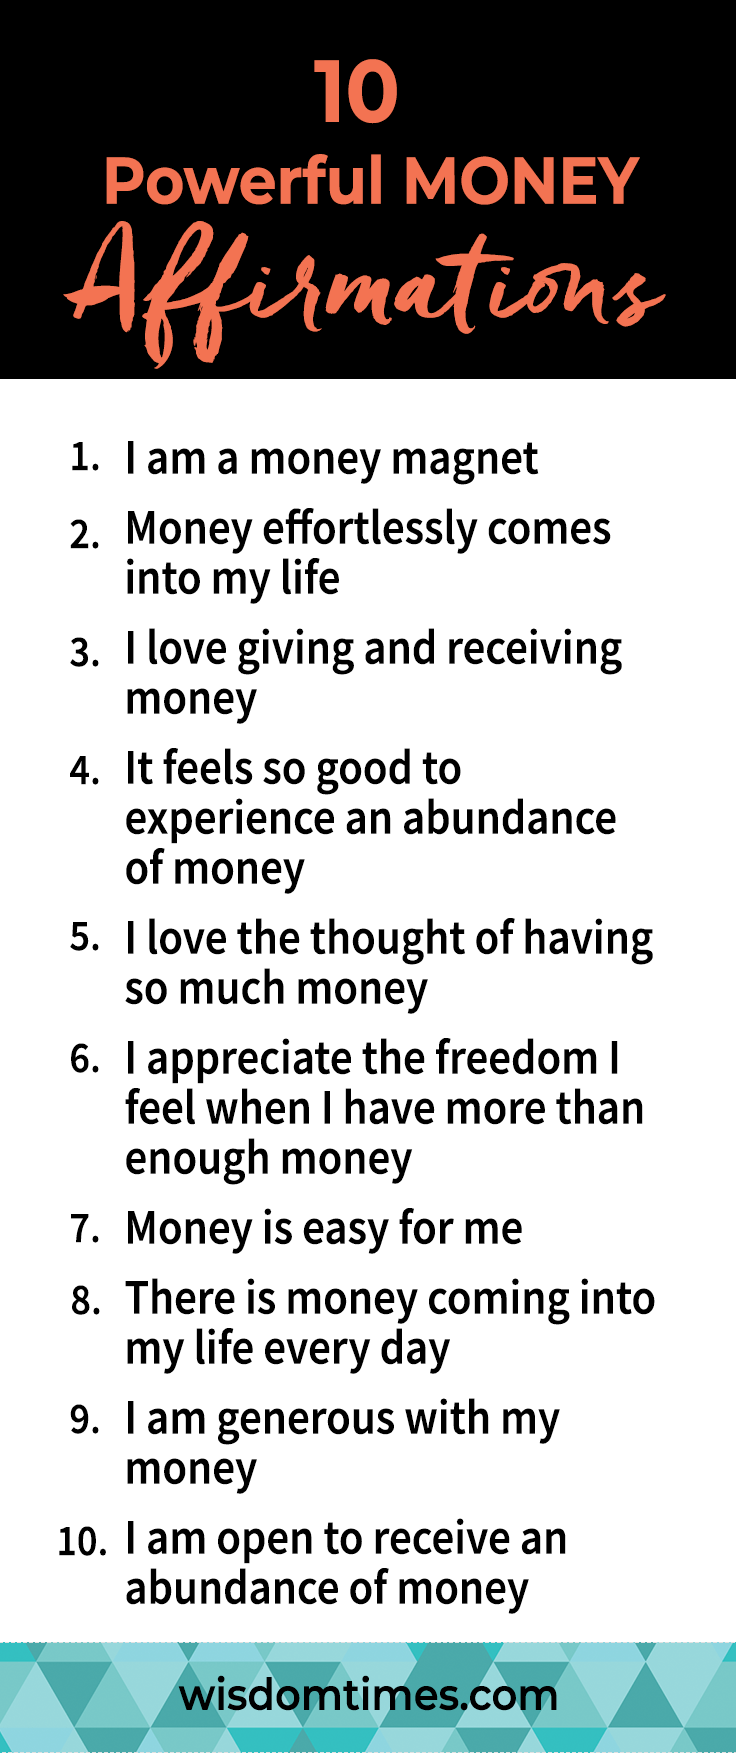 10 Powerful MONEY Affirmations